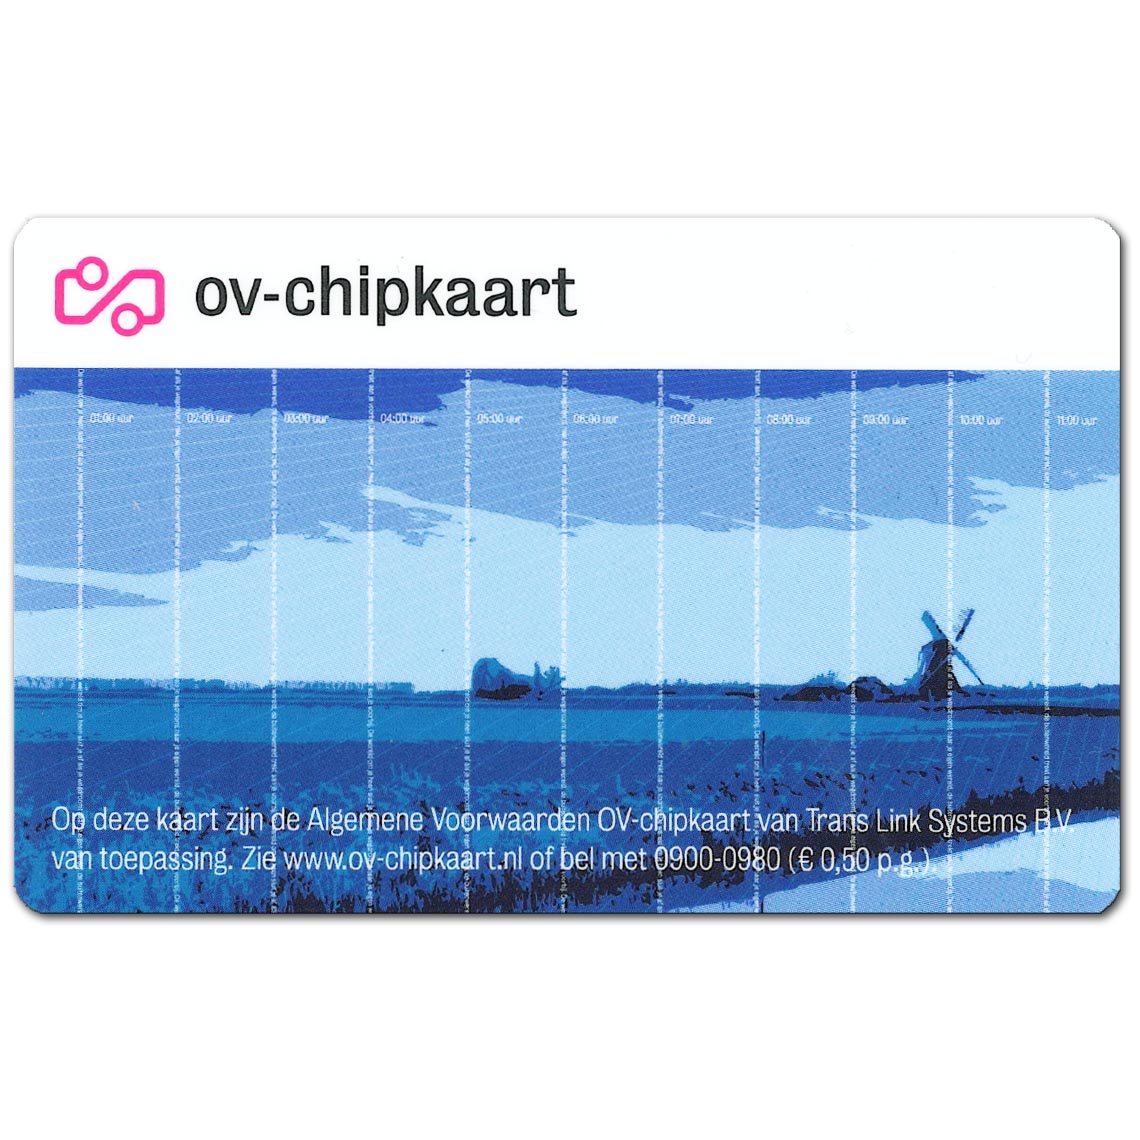 ov chipkaart joint journey discount